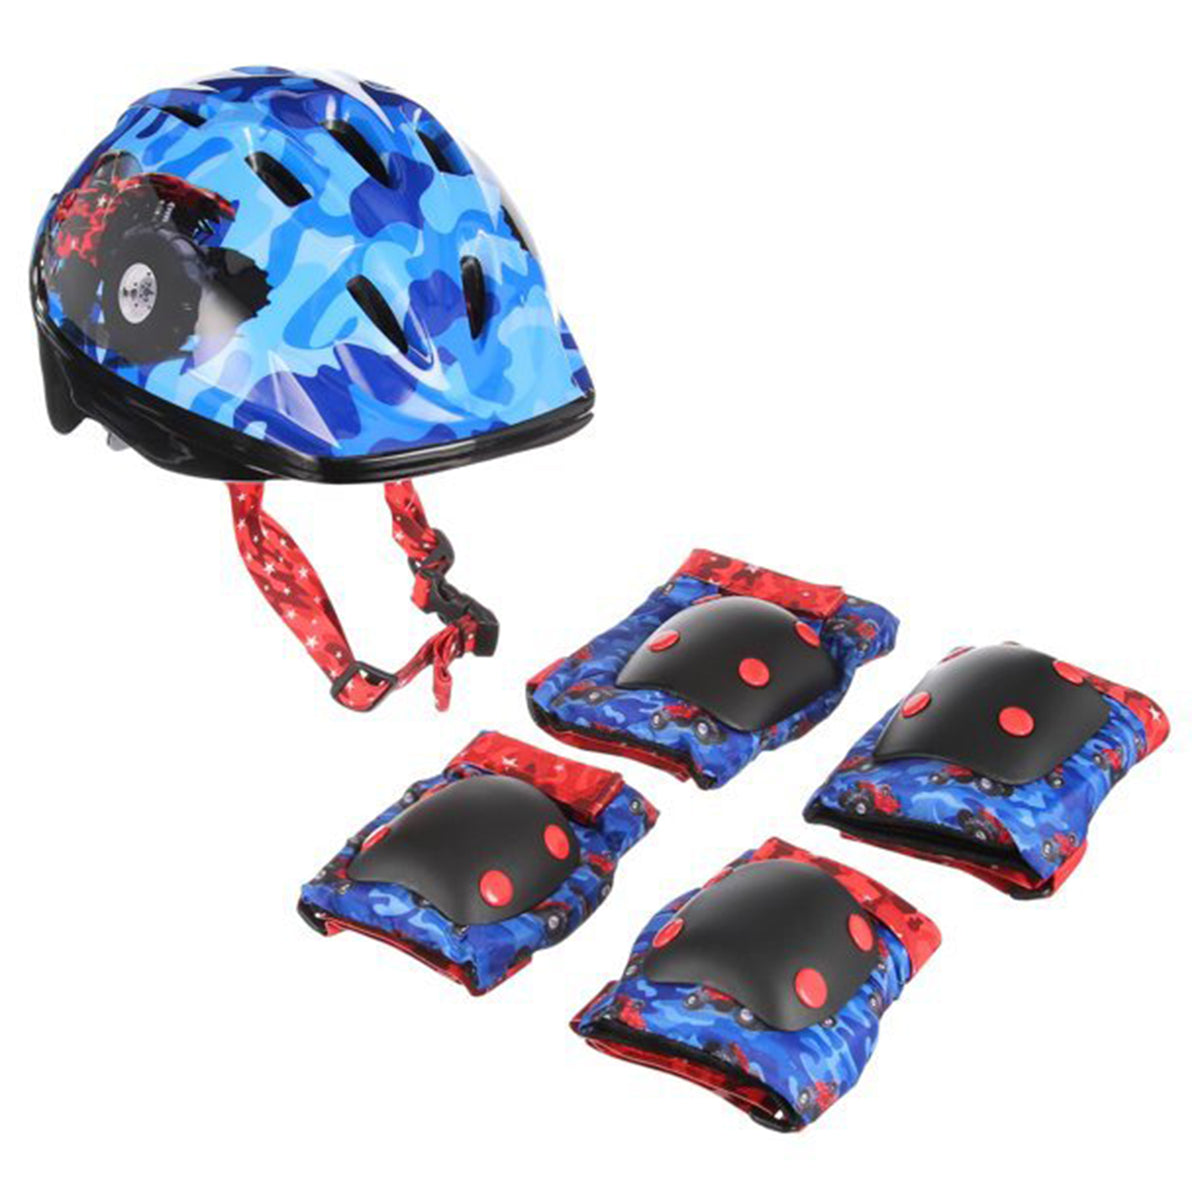 Kent Monster Truck Toddler Helmet & Pad Set Combo | Helmet & Pads for Kids Ages 1-3